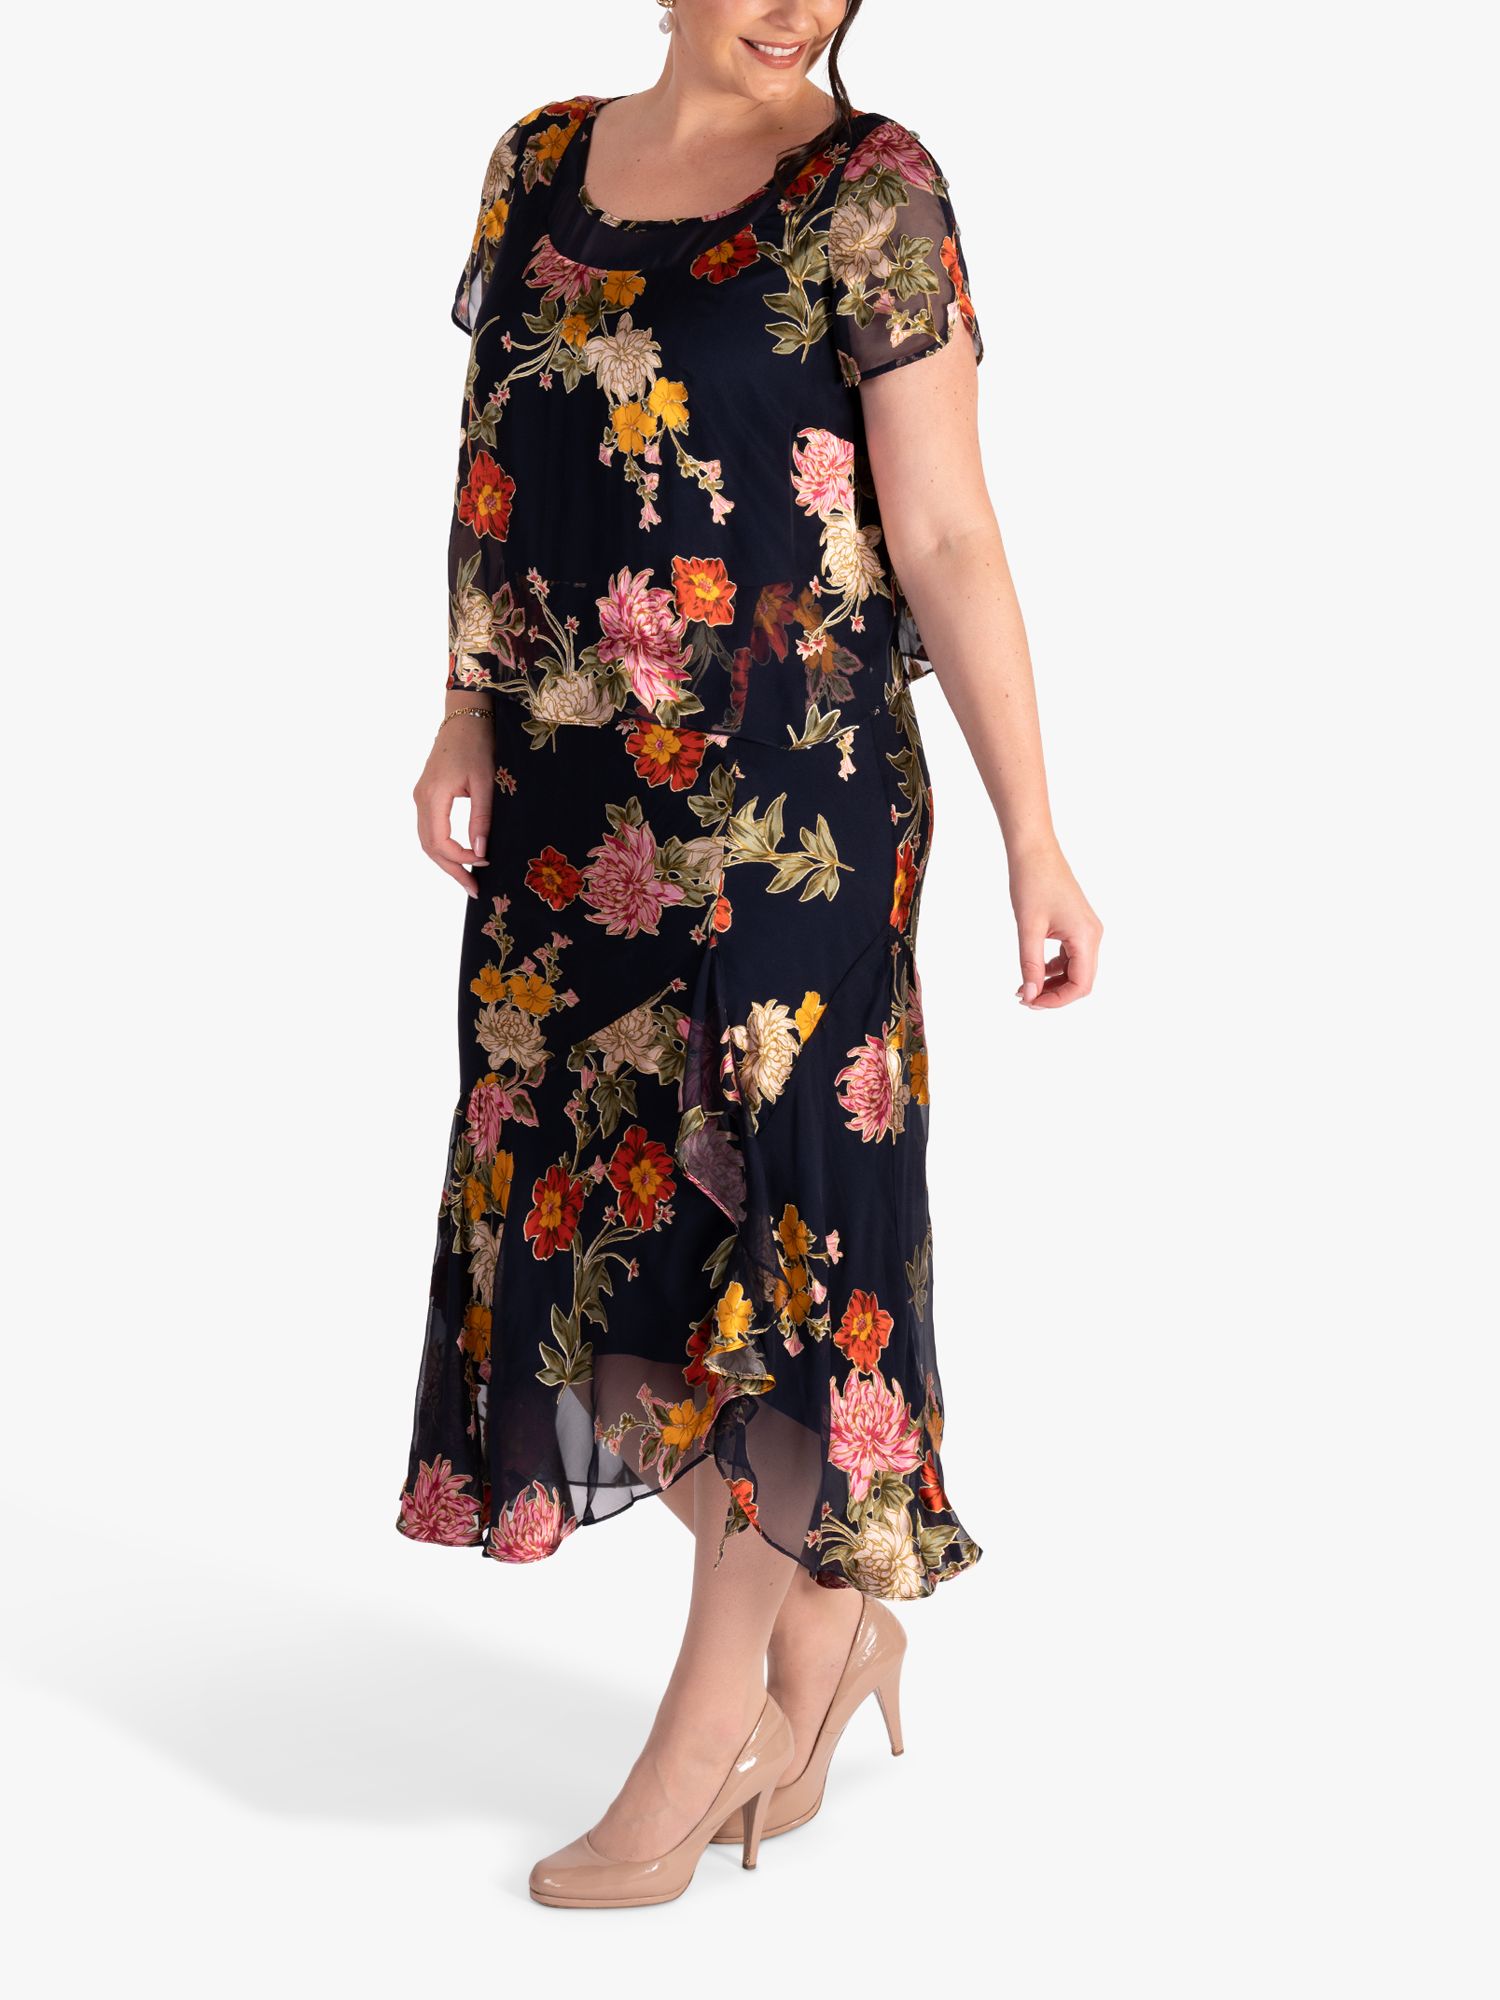 chesca Chrysanthemum Dress, Navy/Multi, 16